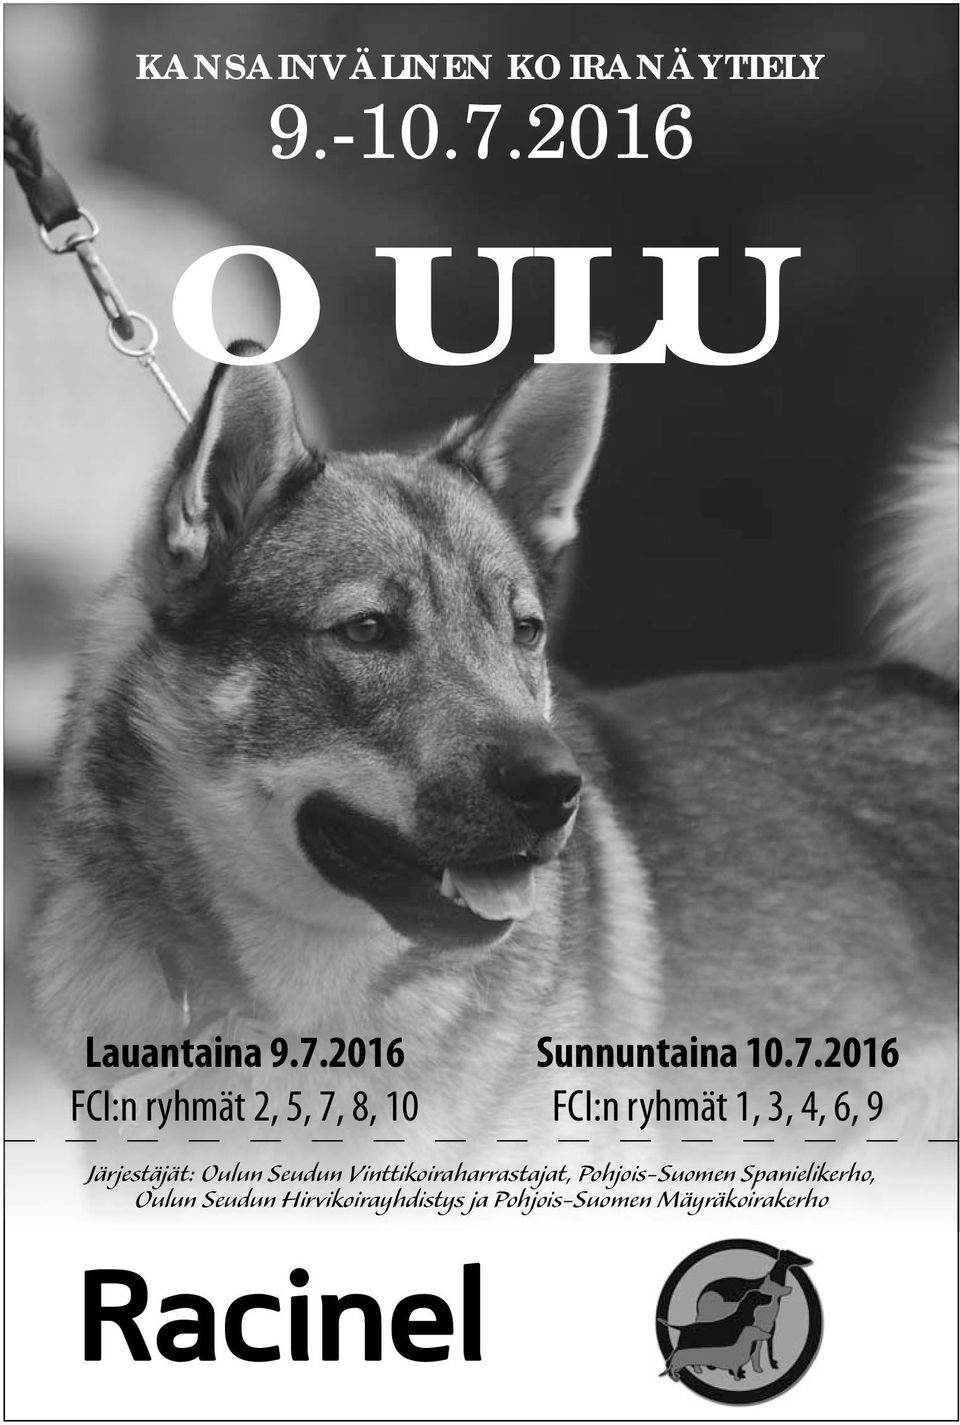 7.2016 FCI:n ryhmät 1, 3, 4, 6, 9 Järjestäjät: Oulun Seudun